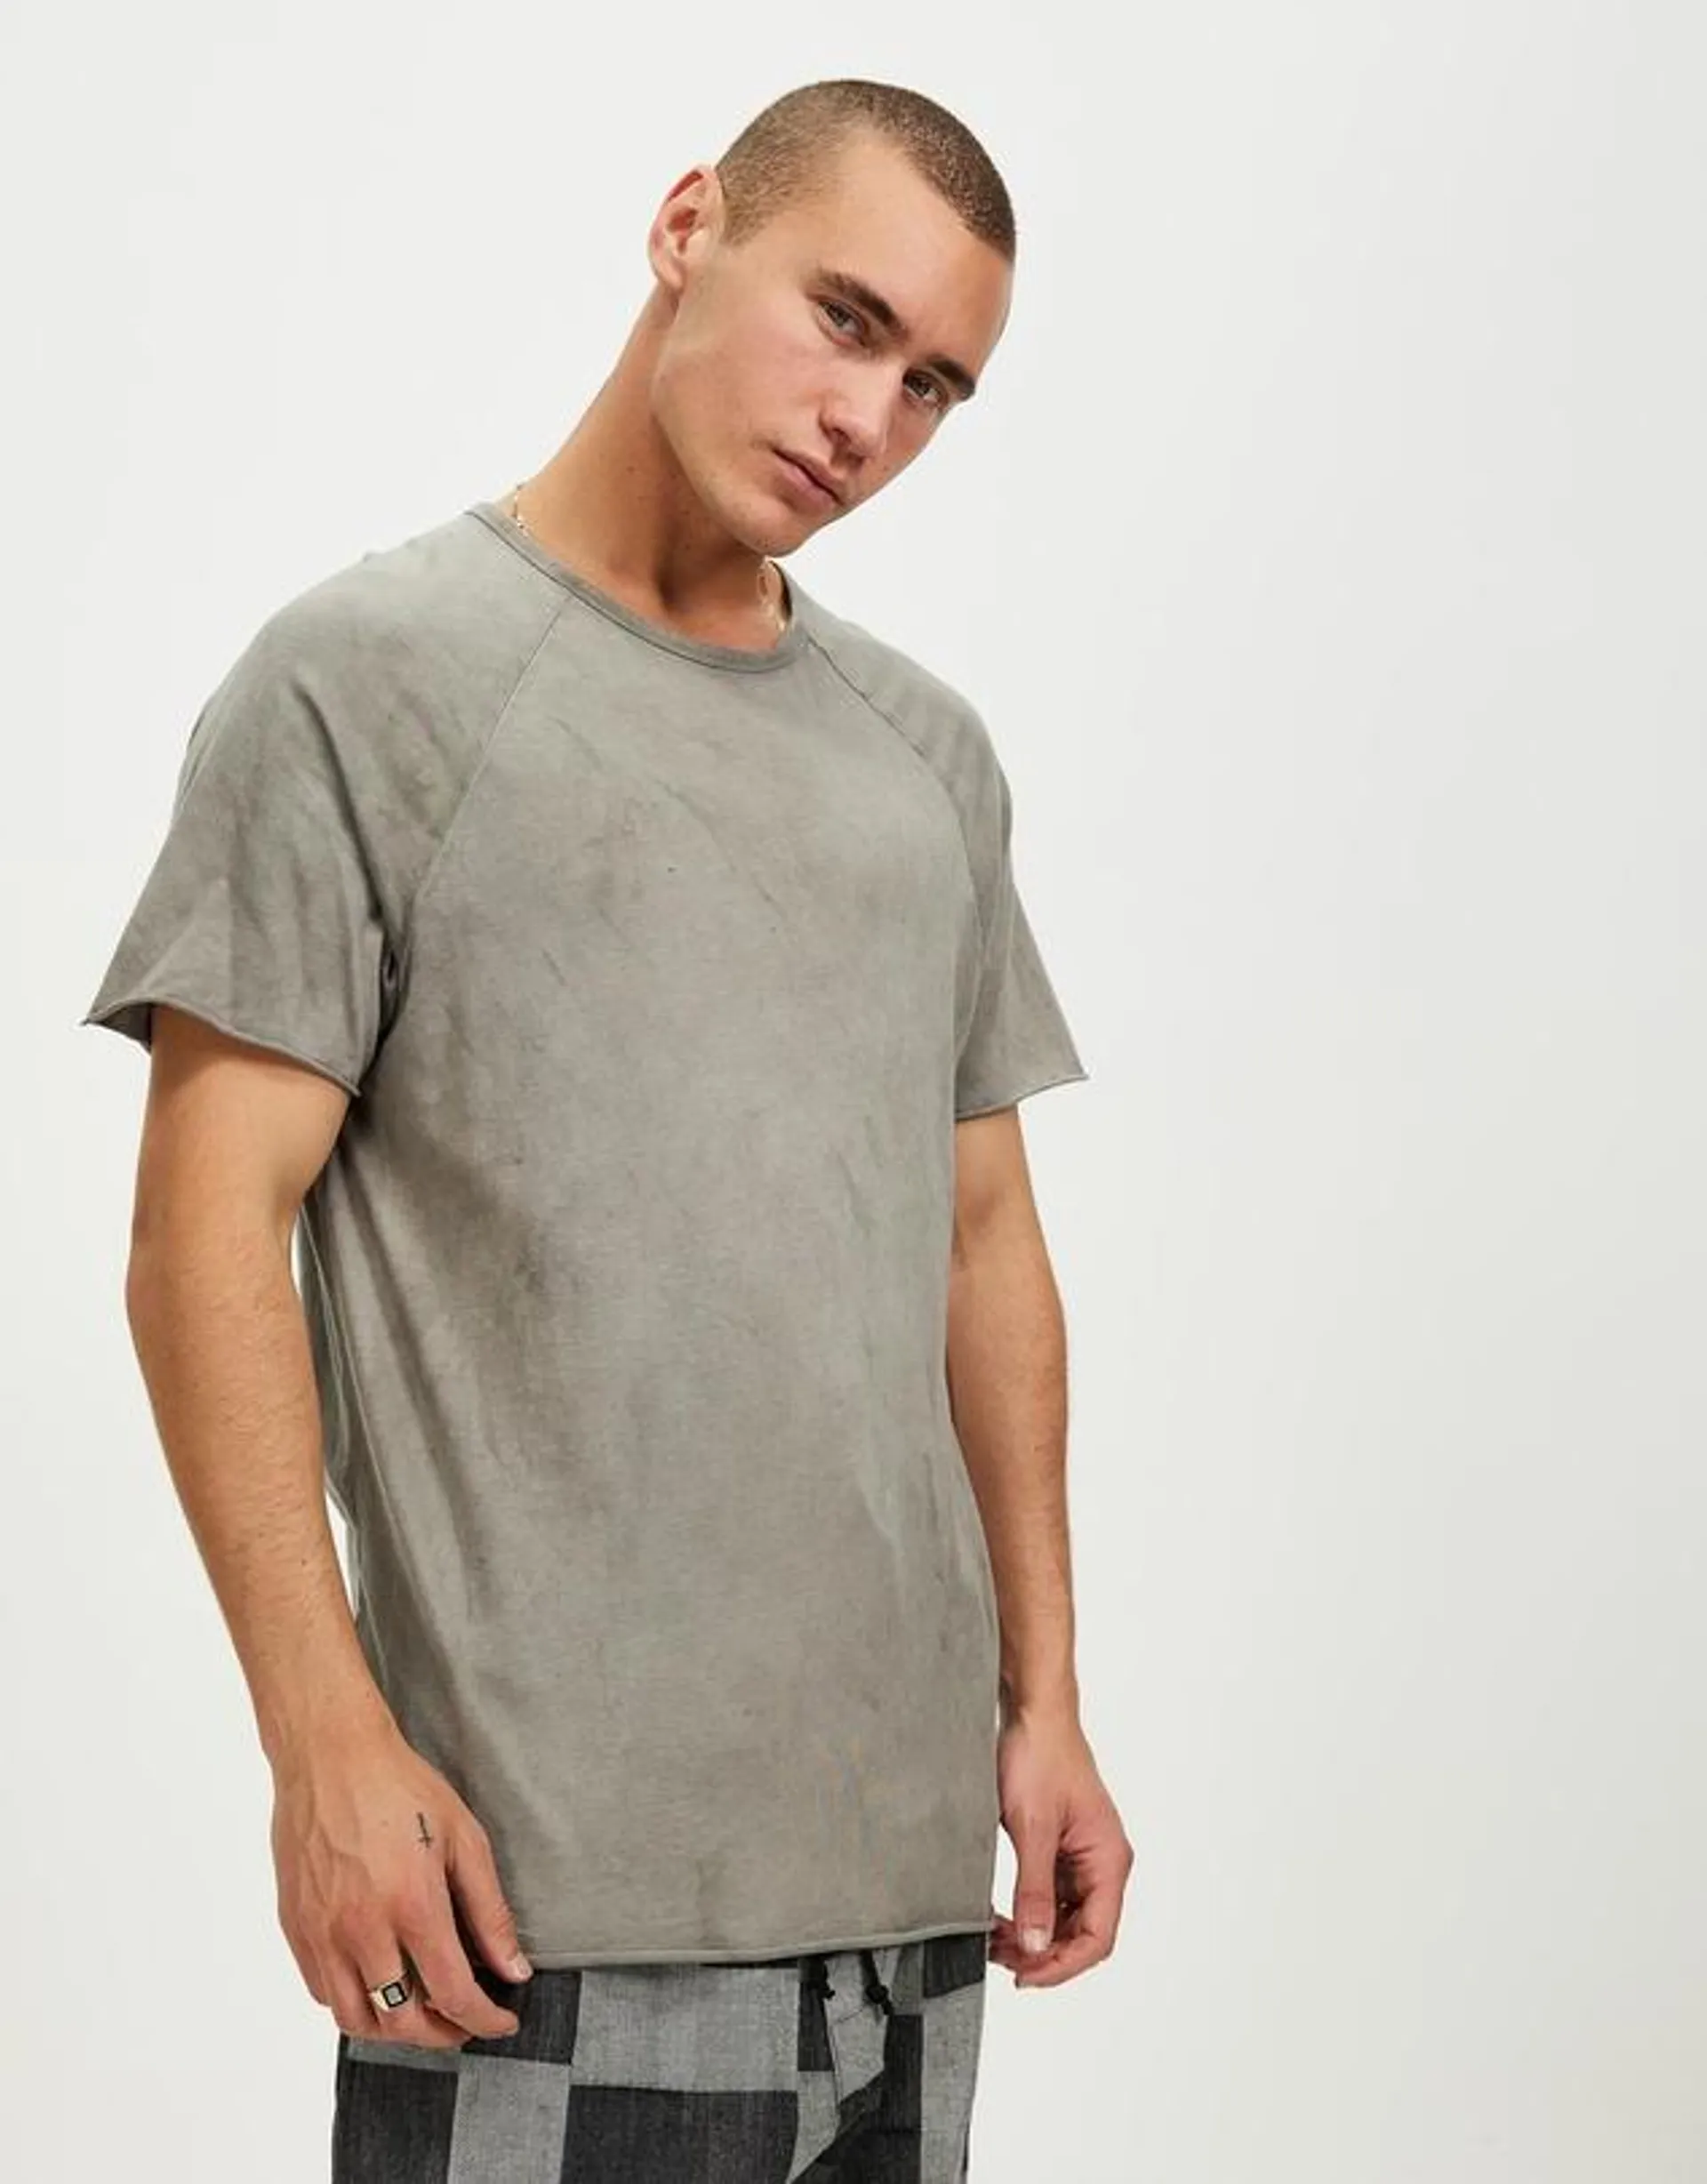 The Thorite Cotton Raglan T-Shirt